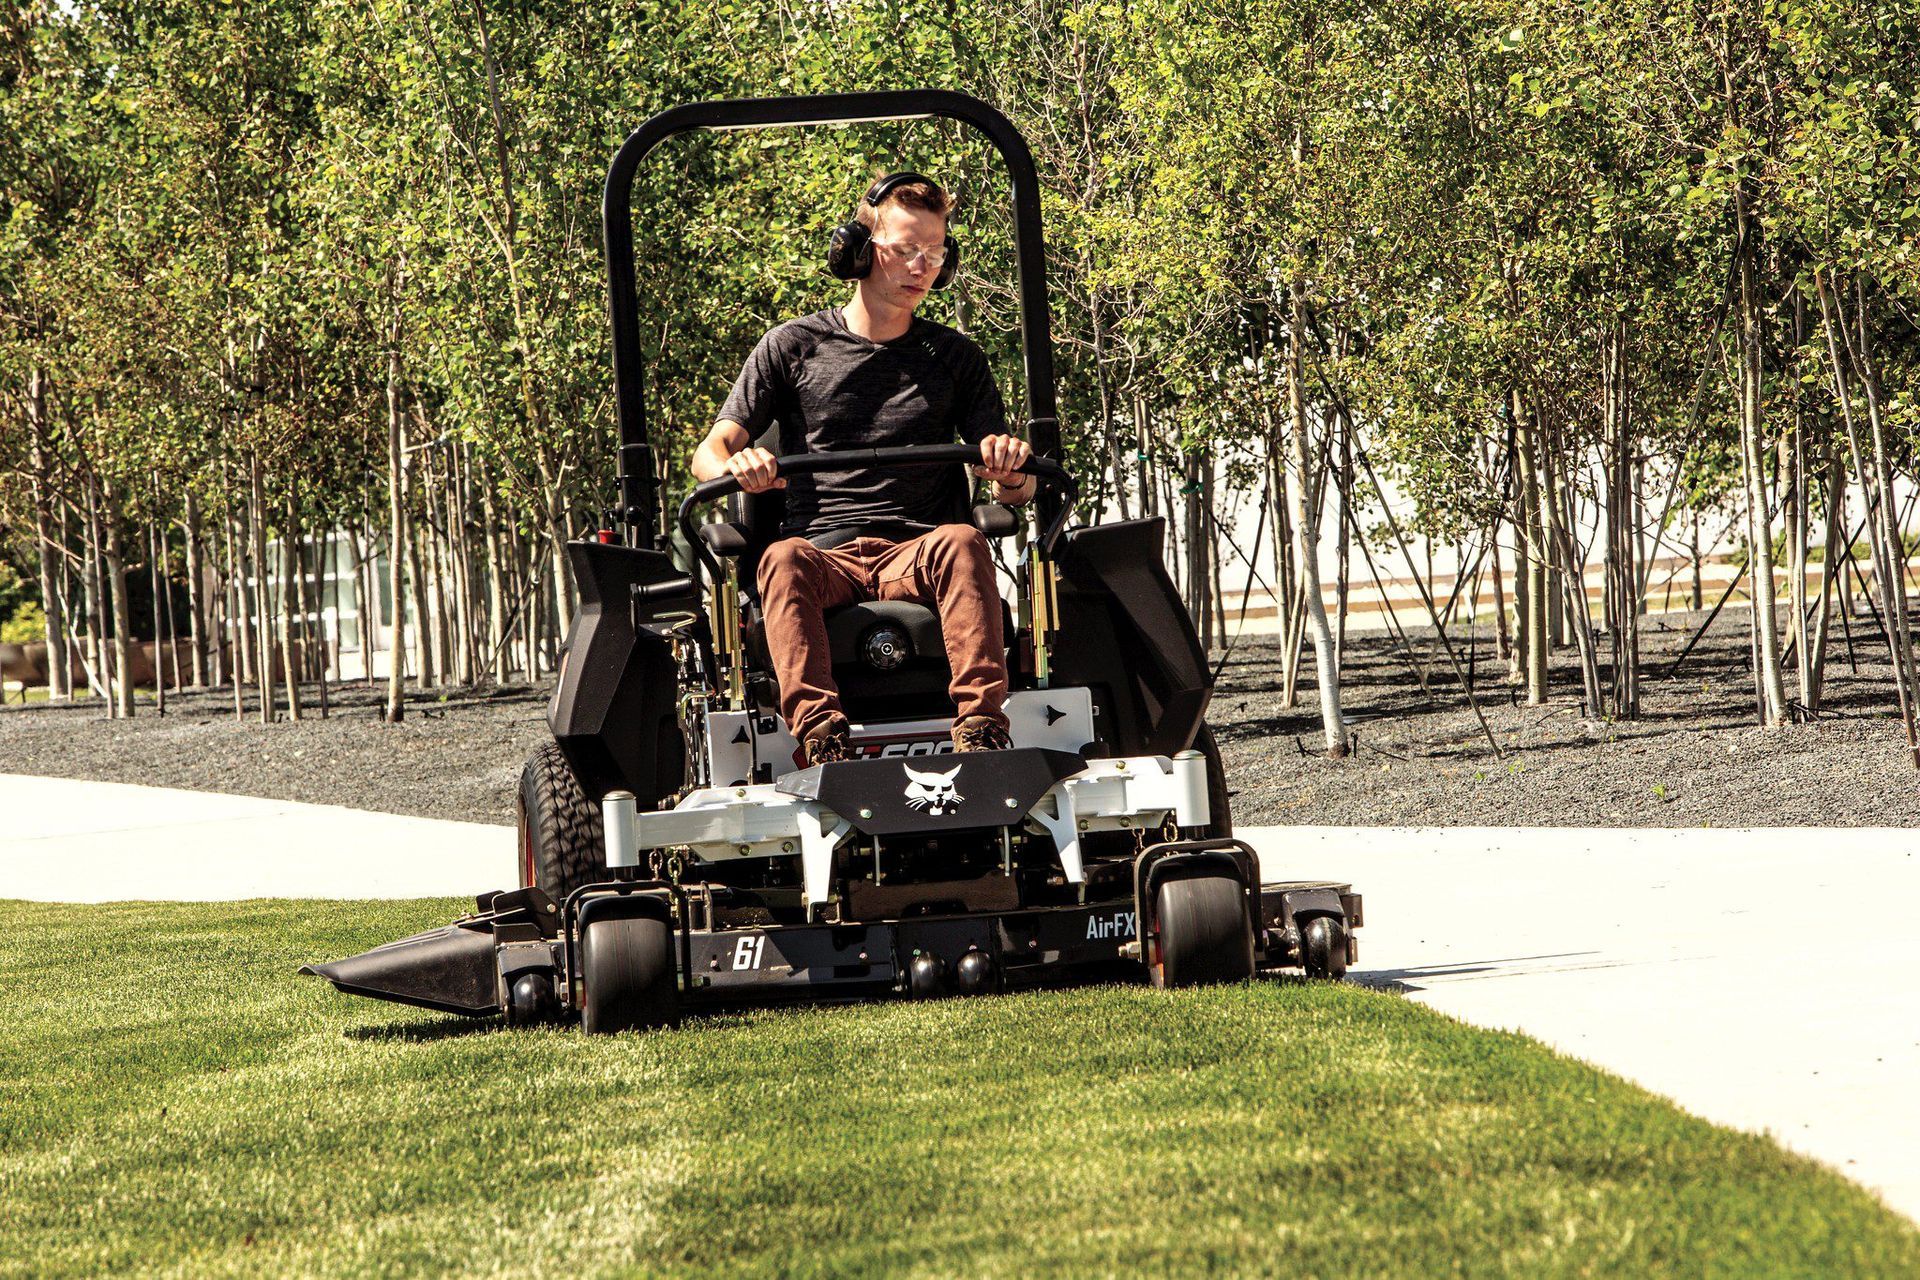 A man is riding a Bobcat ZT 6000 mower on a lush green lawn.